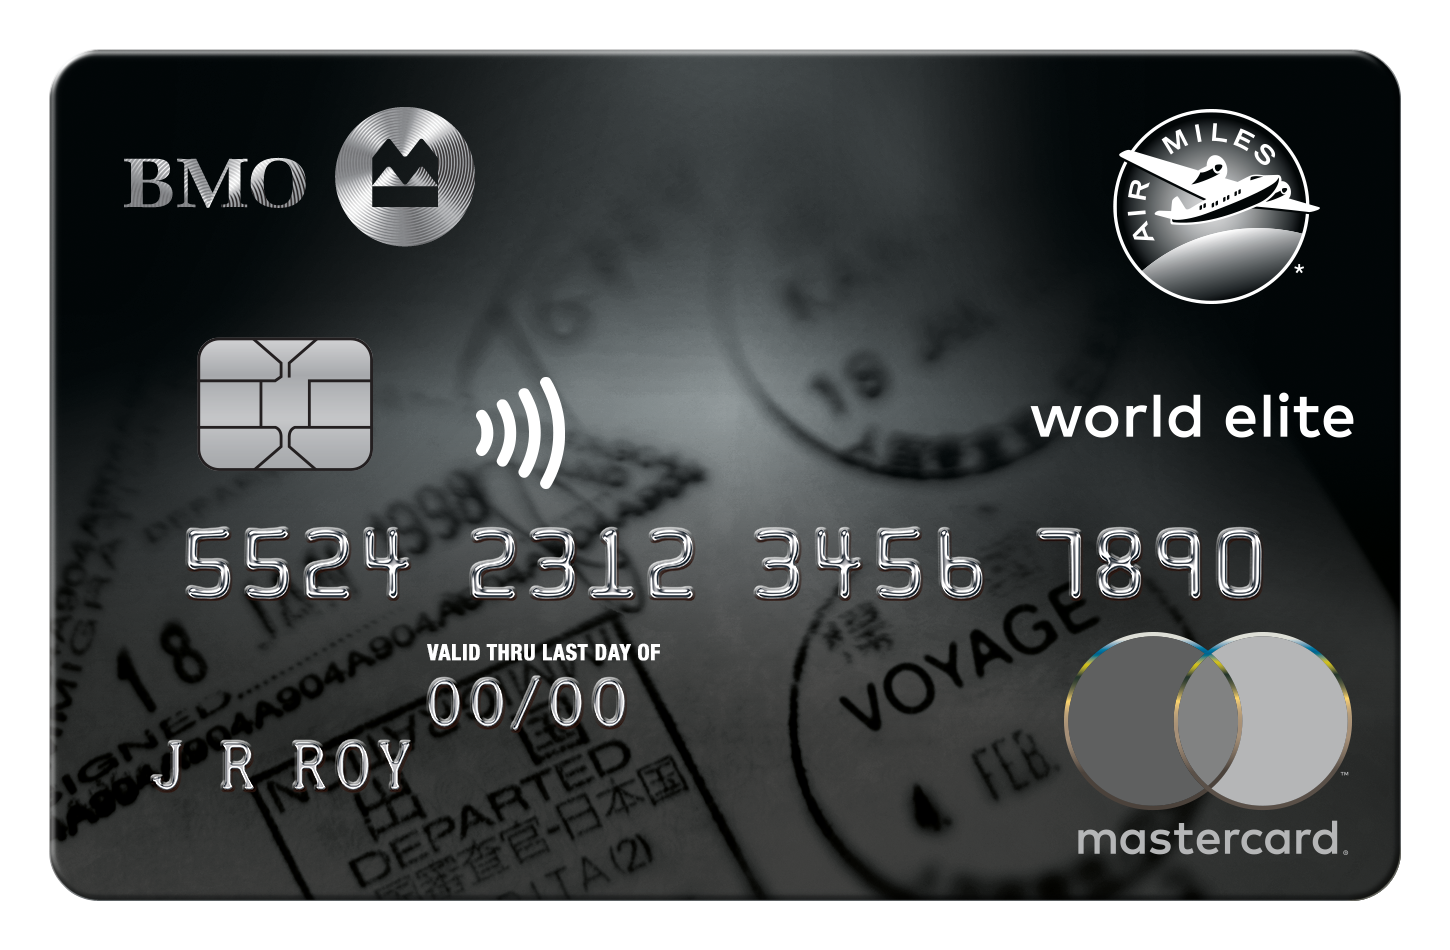 bmo world elite mastercard travel insurance certificate